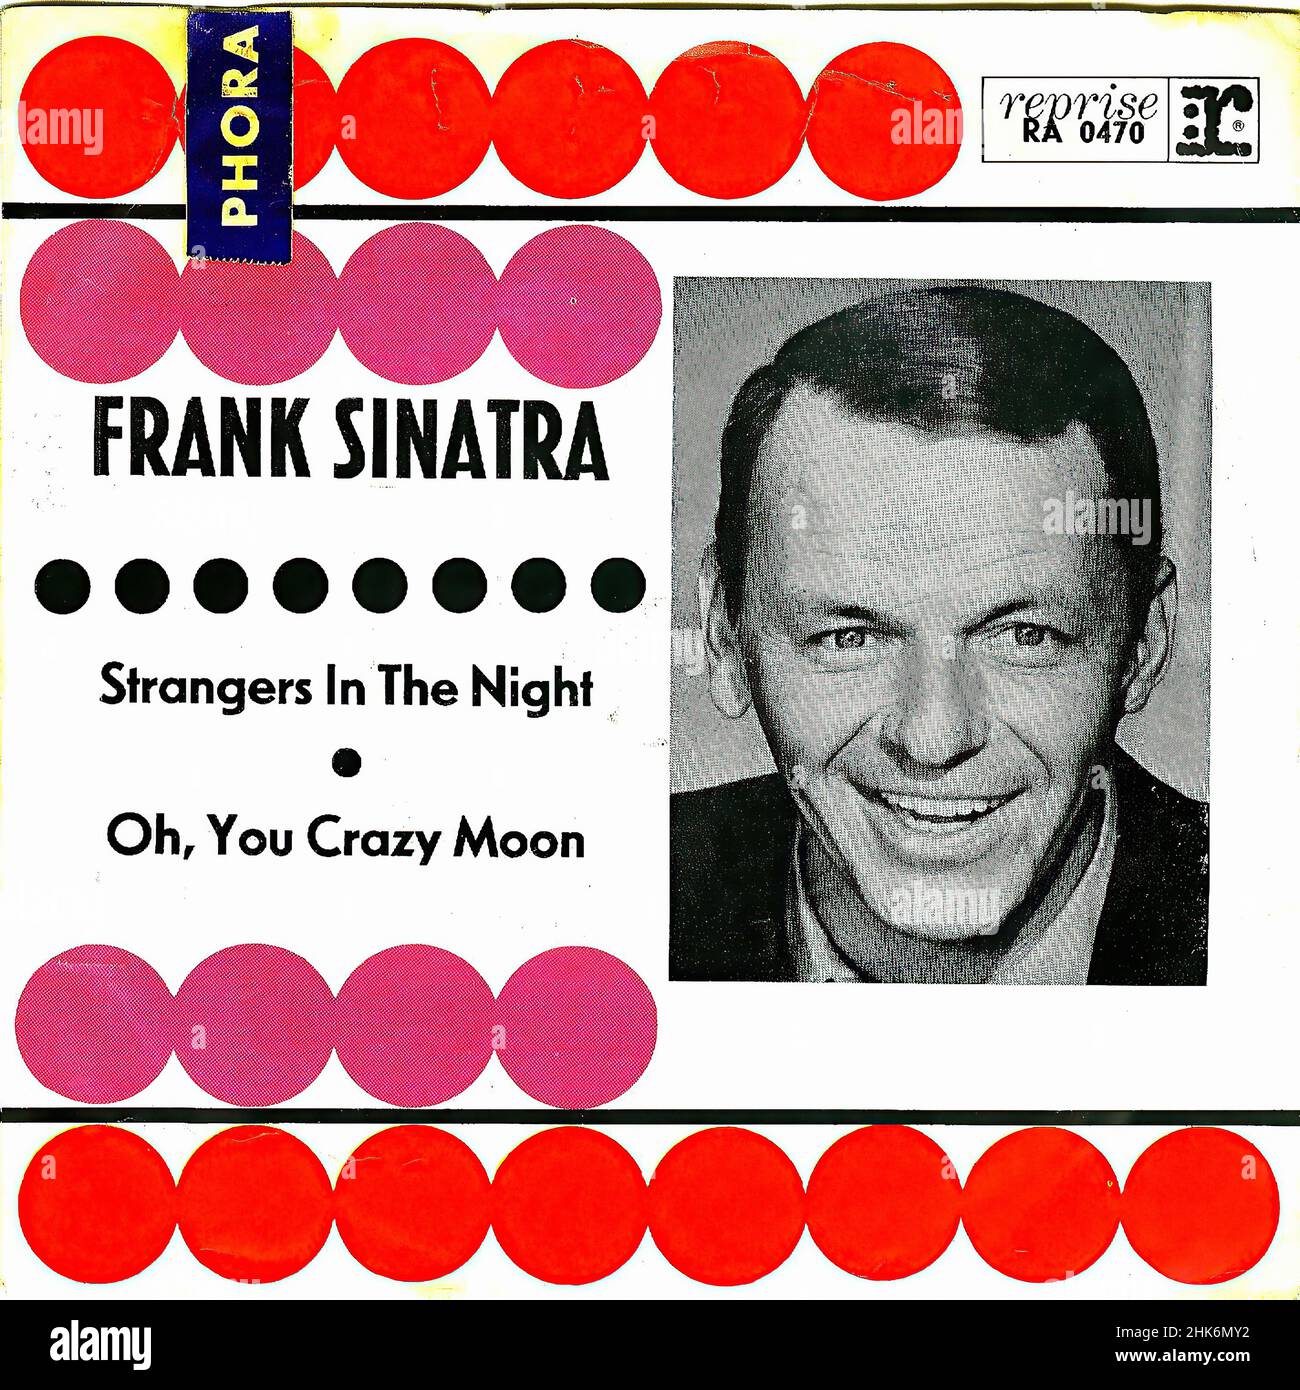 Vintage vinilo discográfico - Sinatra, Frank - Strangers in the Night - D - 1966 Foto de stock